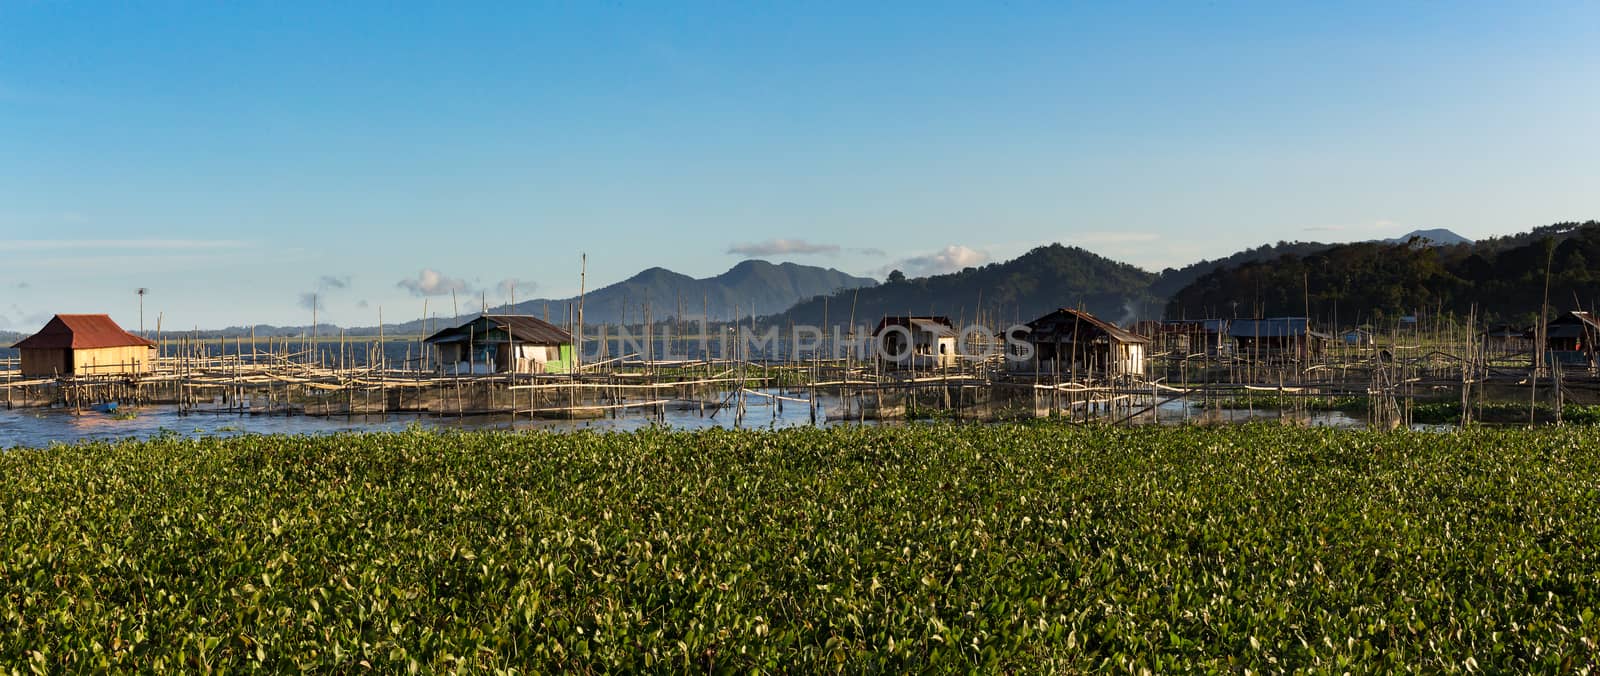 Fish farm and hatchery or nursery, Lake Tondano, Sulawesi, Indonesia (Celebes), Asia